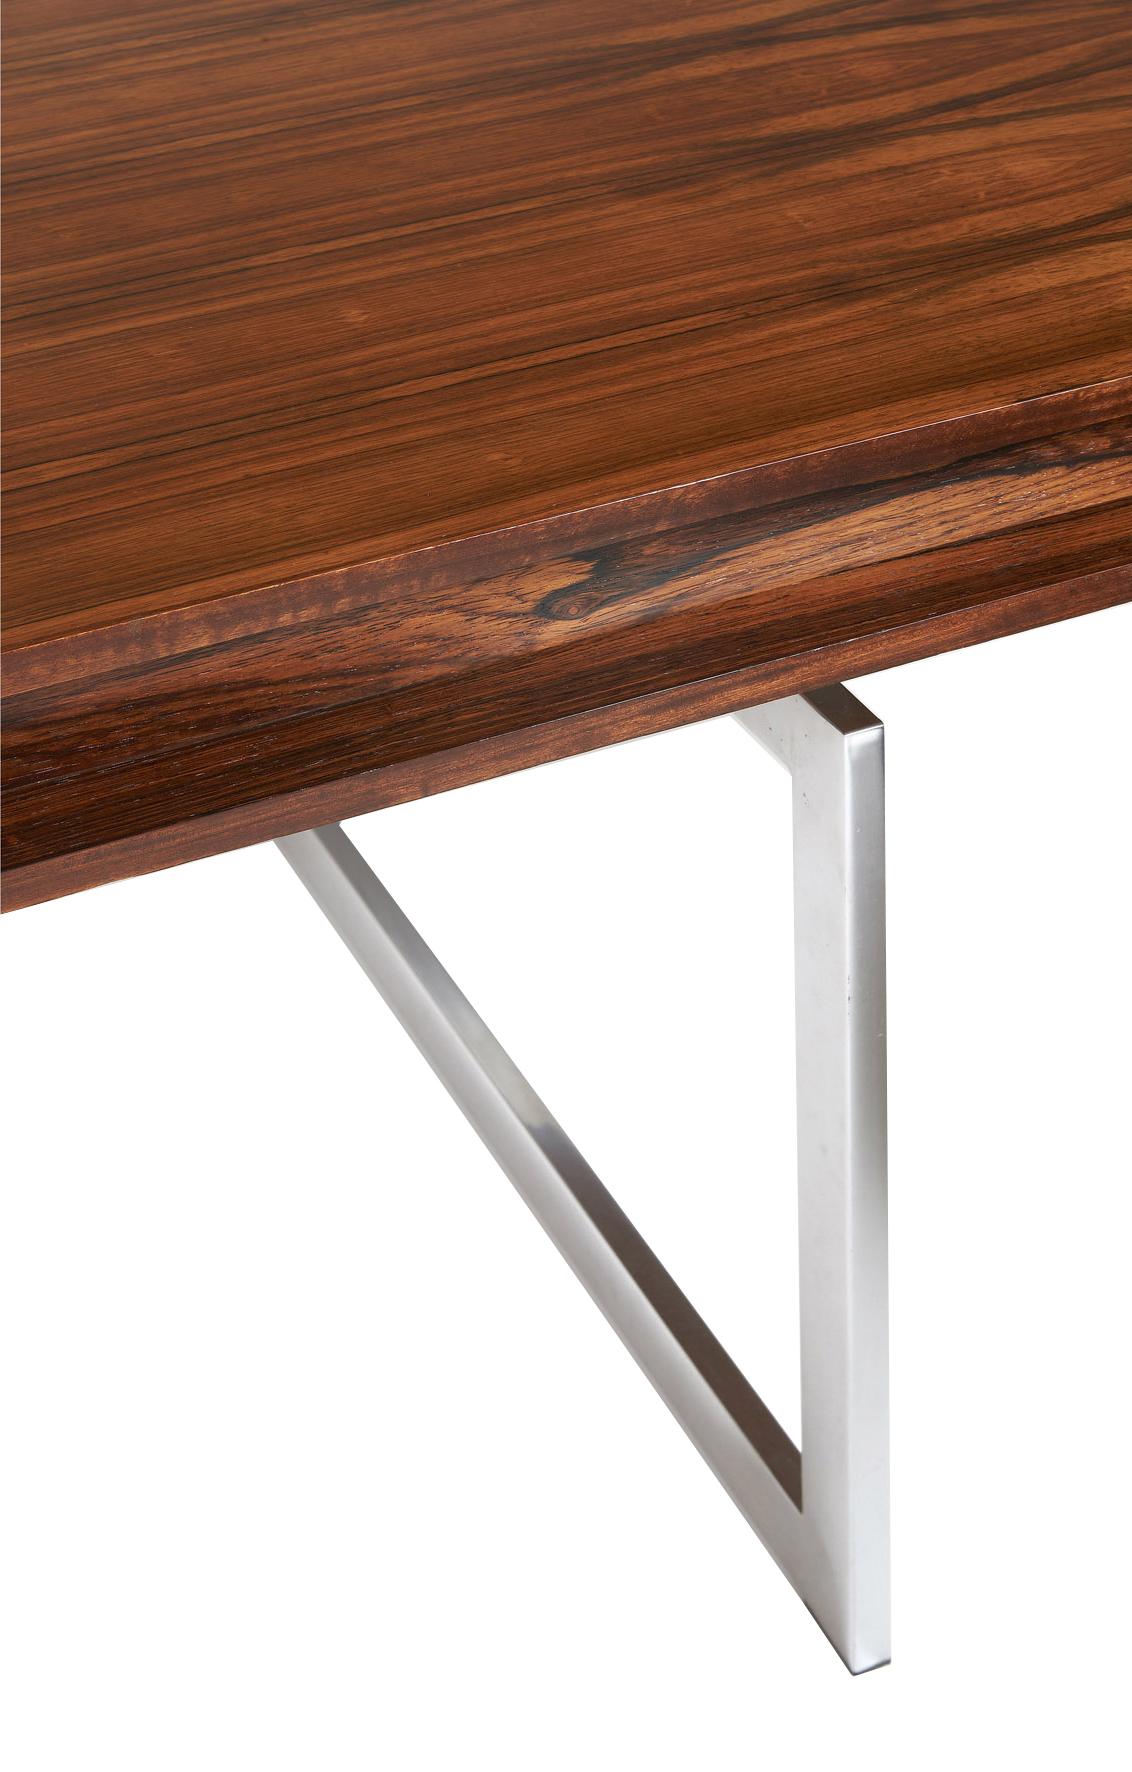 Danish Bodil Kjaer Large Freestanding Rosewood Executive Desk by E. Pedersen & Søn For Sale